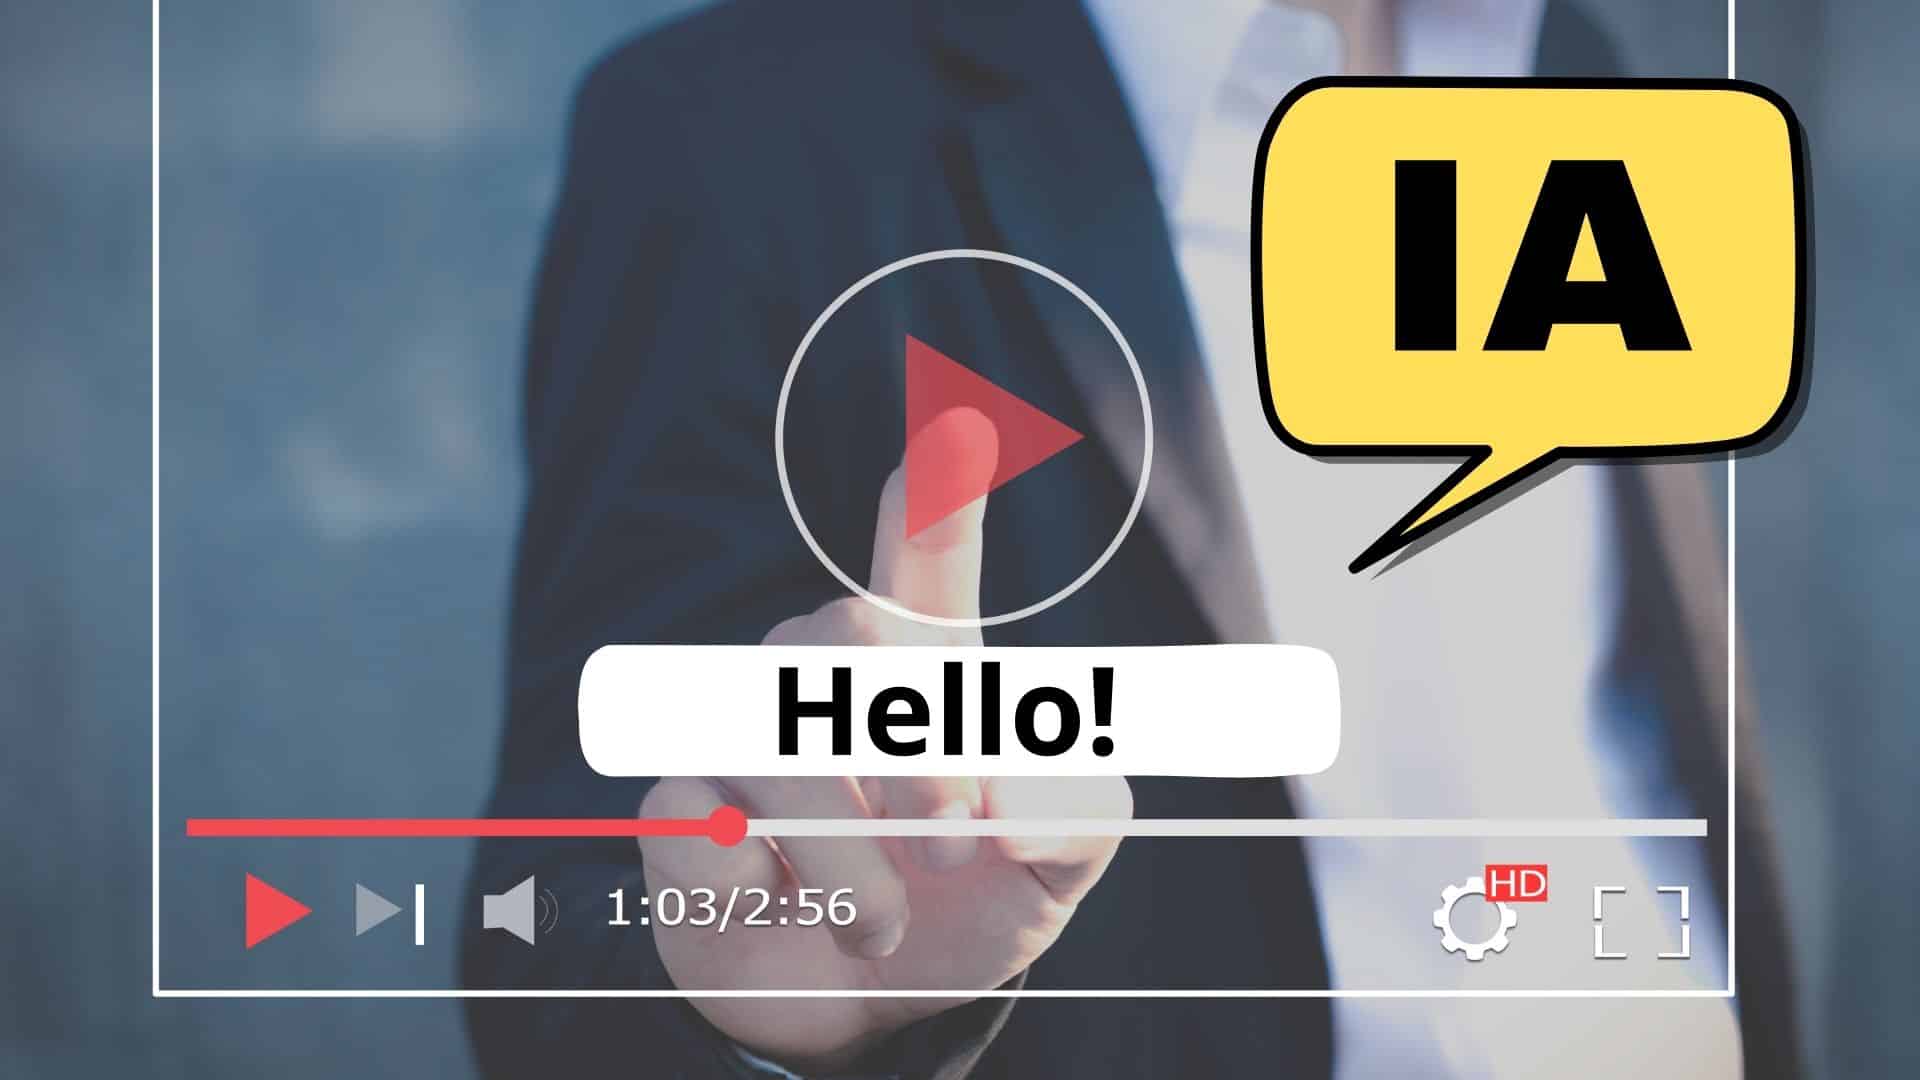 Subtitula vídeos con inteligencia artificial (IA)